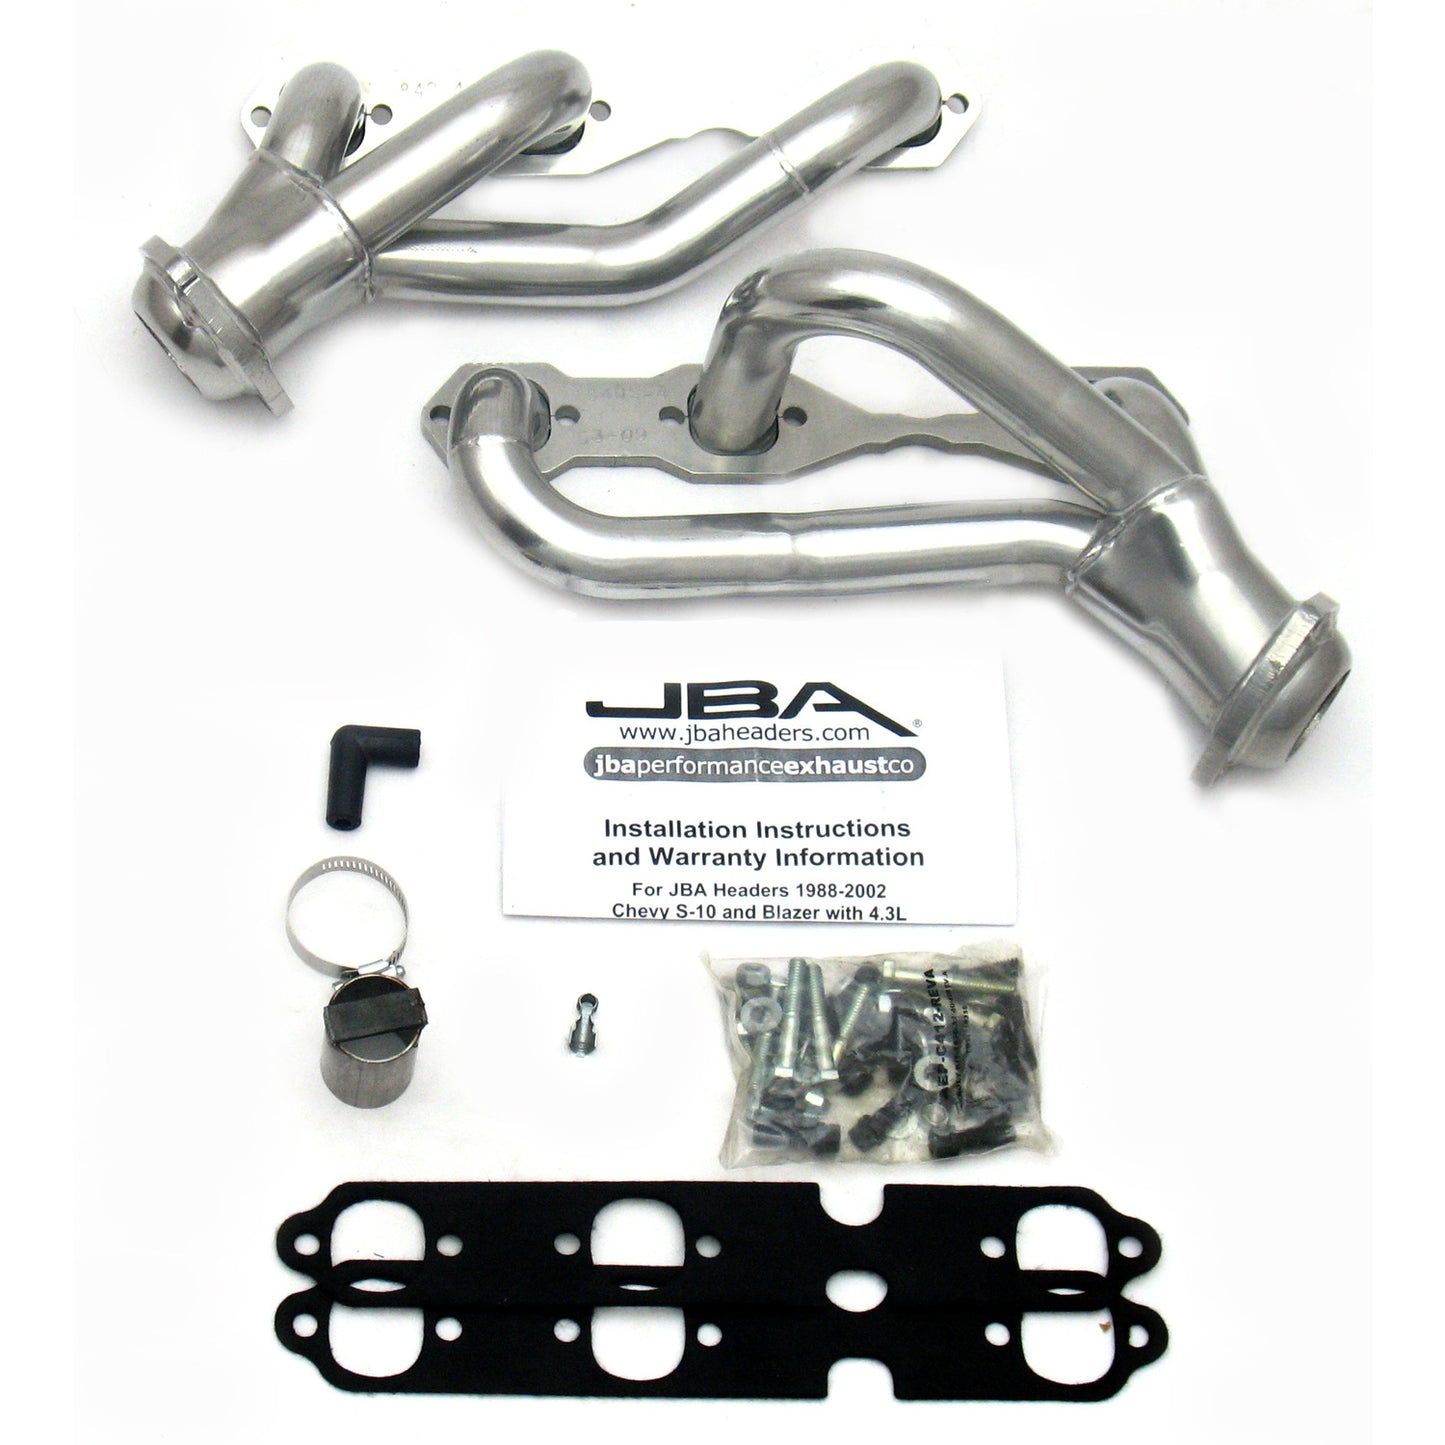 JBA Performance Exhaust 1840S-4JS 1 1/2" Header Shorty Stainless Steel 88-95/02-03 S10 4.3L 2 Wheel Drive Silver Ceramic